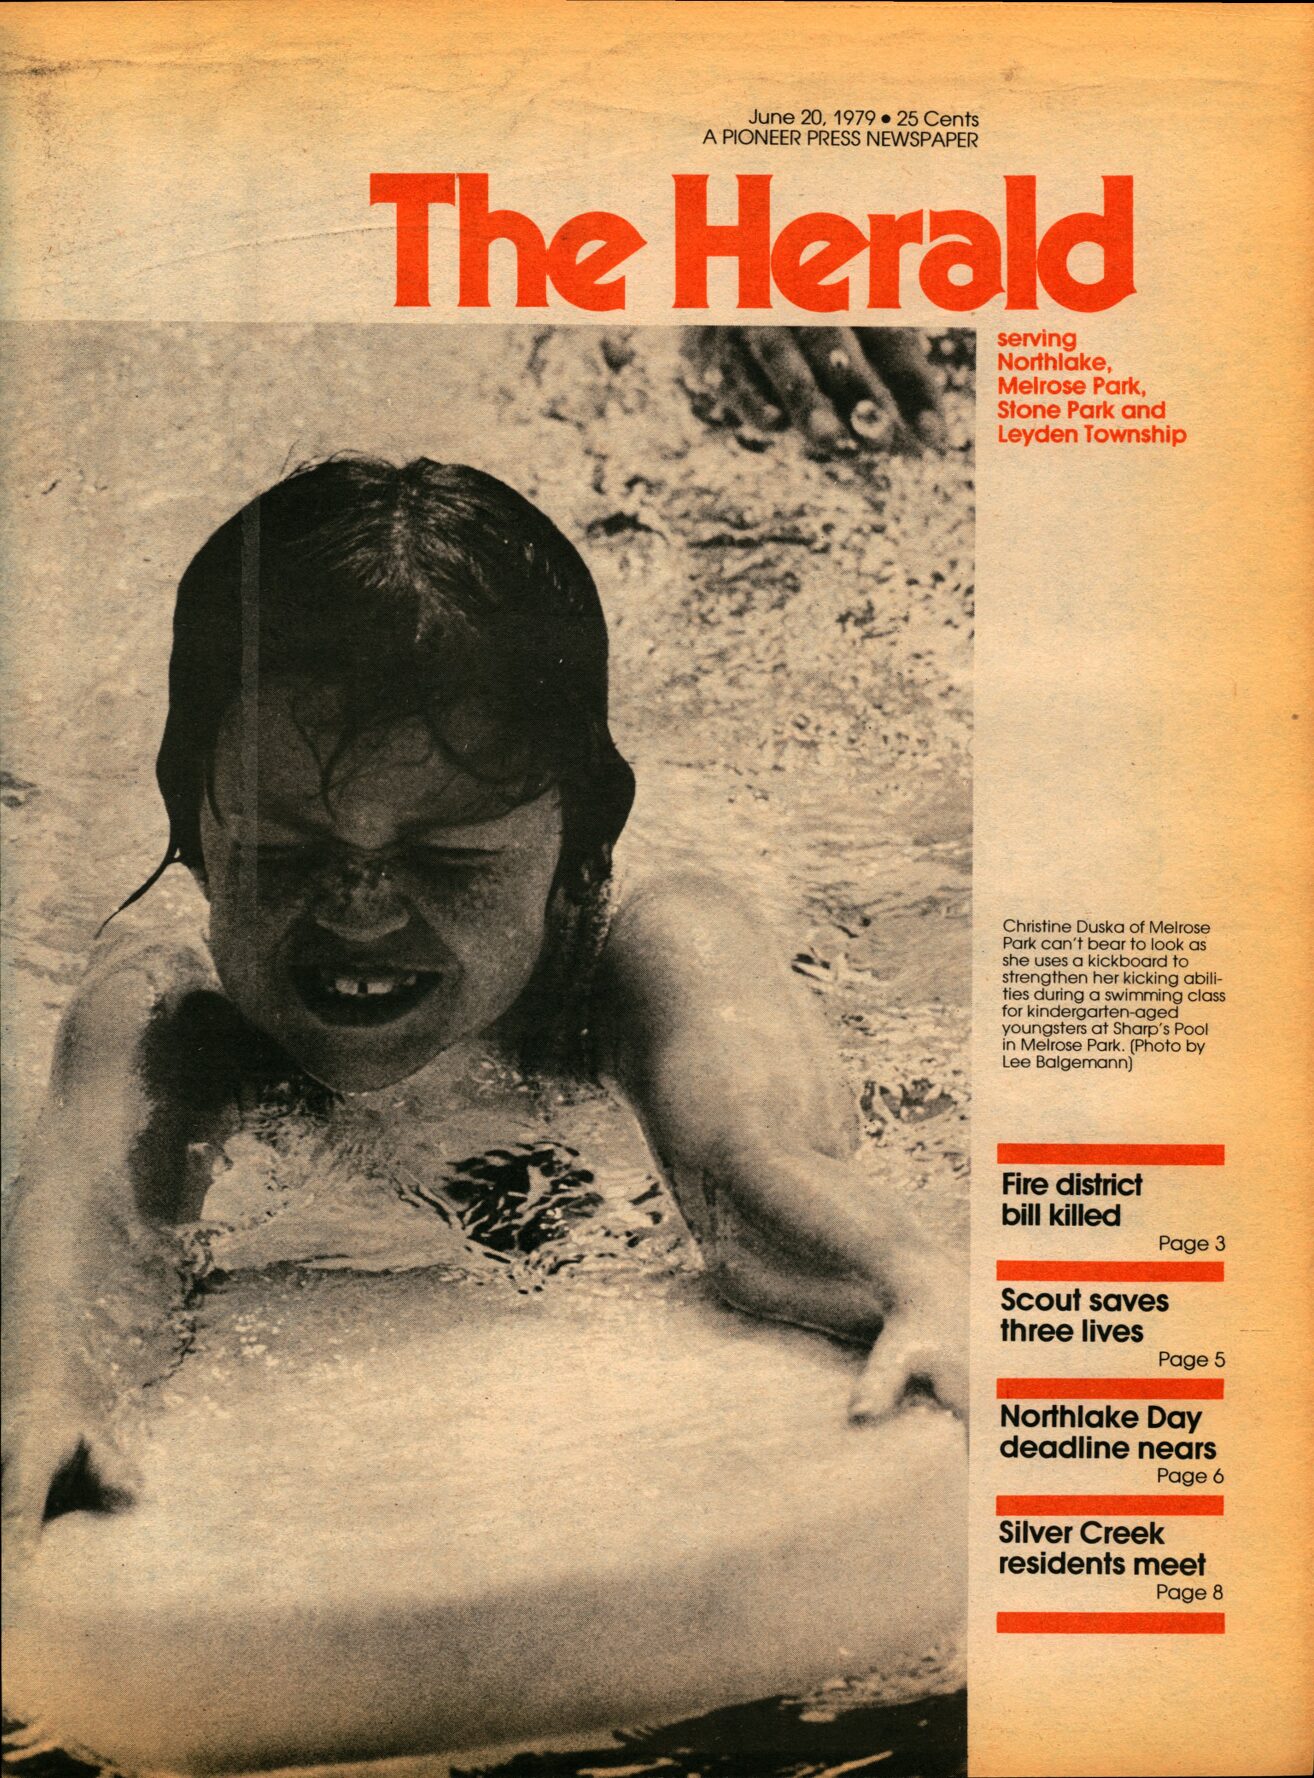 The Herald – 19790620